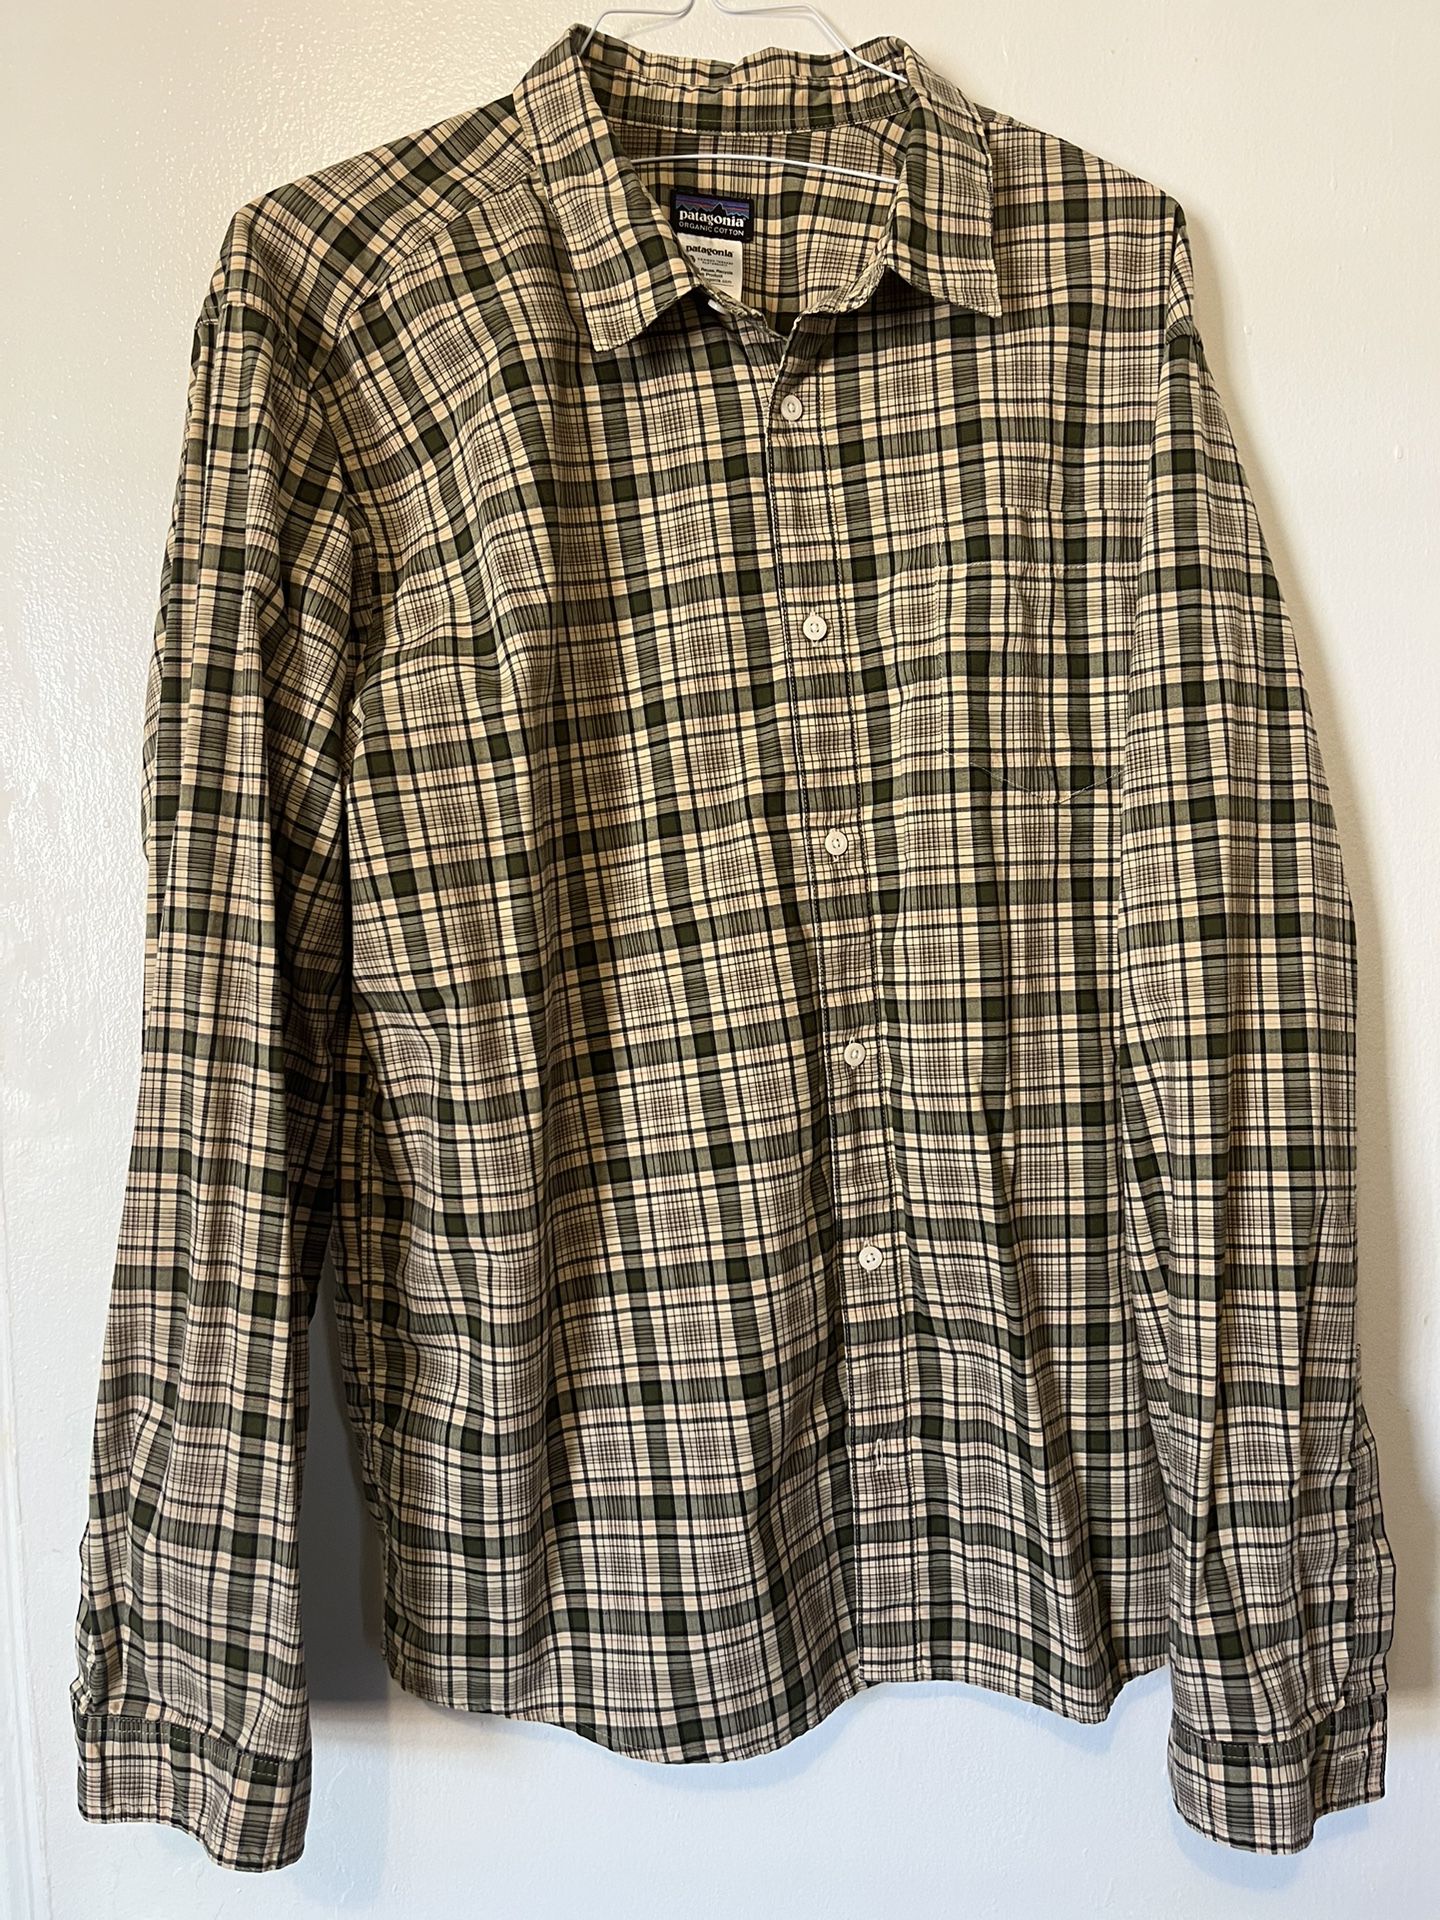 Patagonia Mens Multicolor Plaid Cotton Blend Long Sleeve Button Up Shirt Size XL